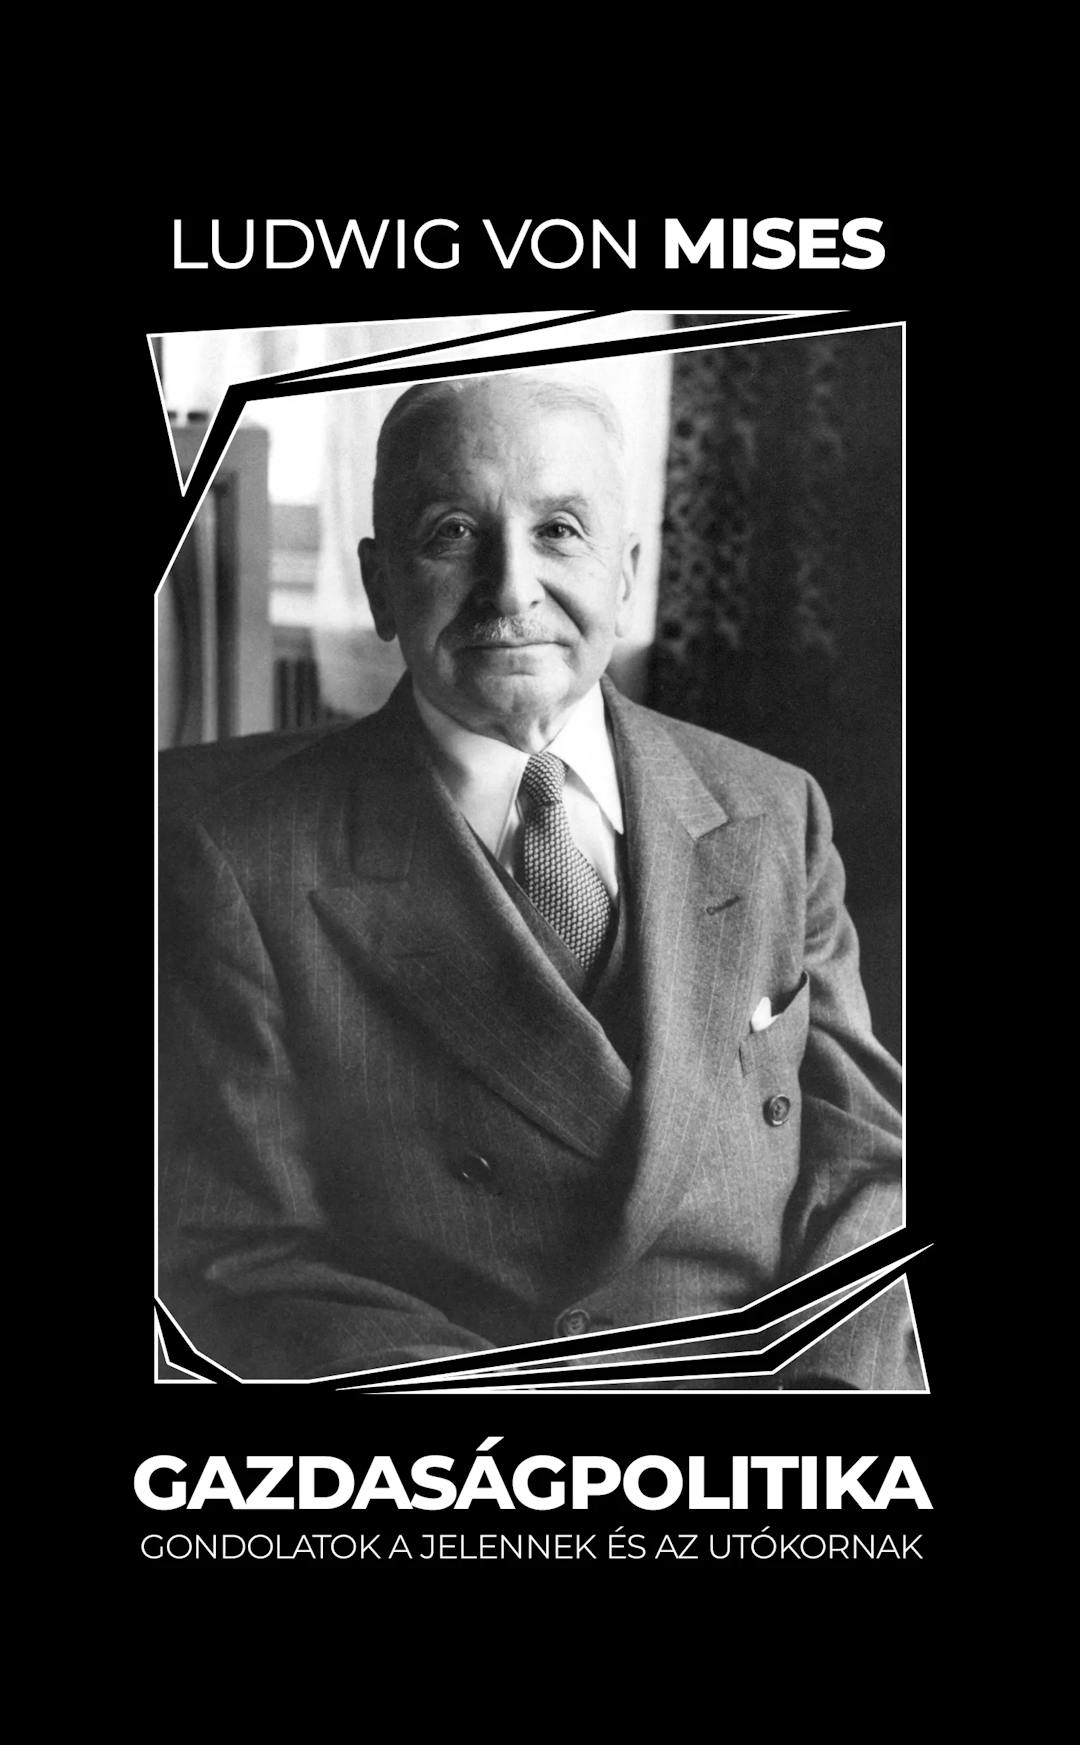 Ludwig von Mises: Gazdaságpolitika